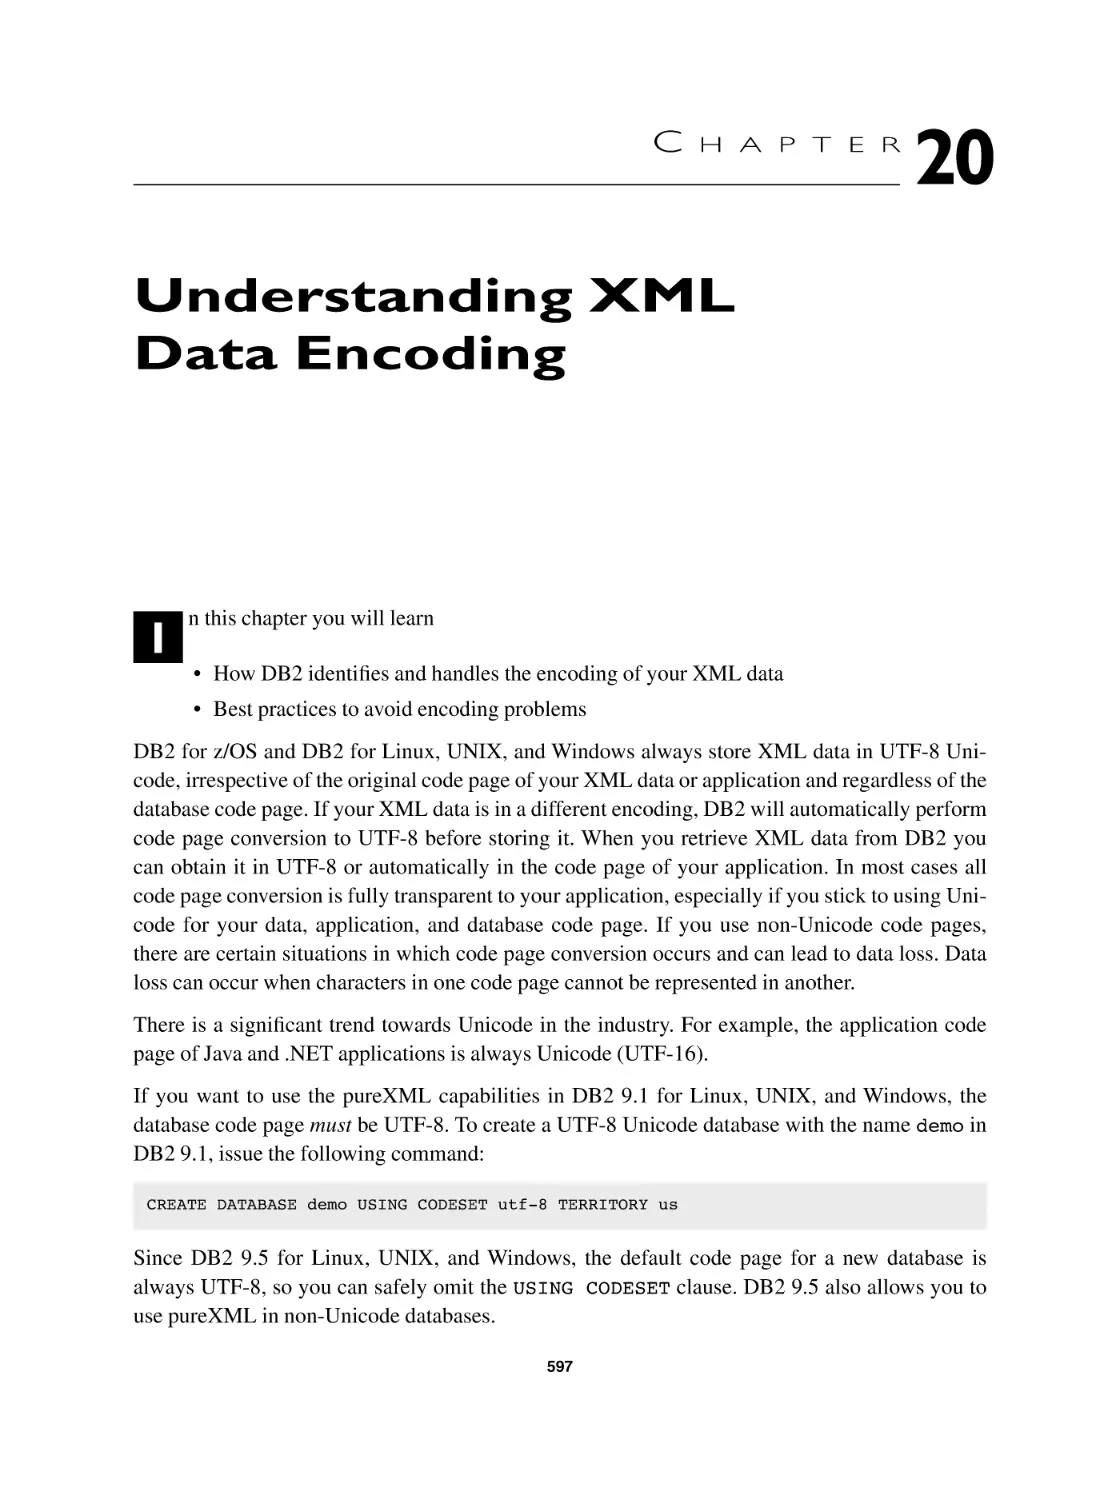 Chapter 20 Understanding XML Data Encoding